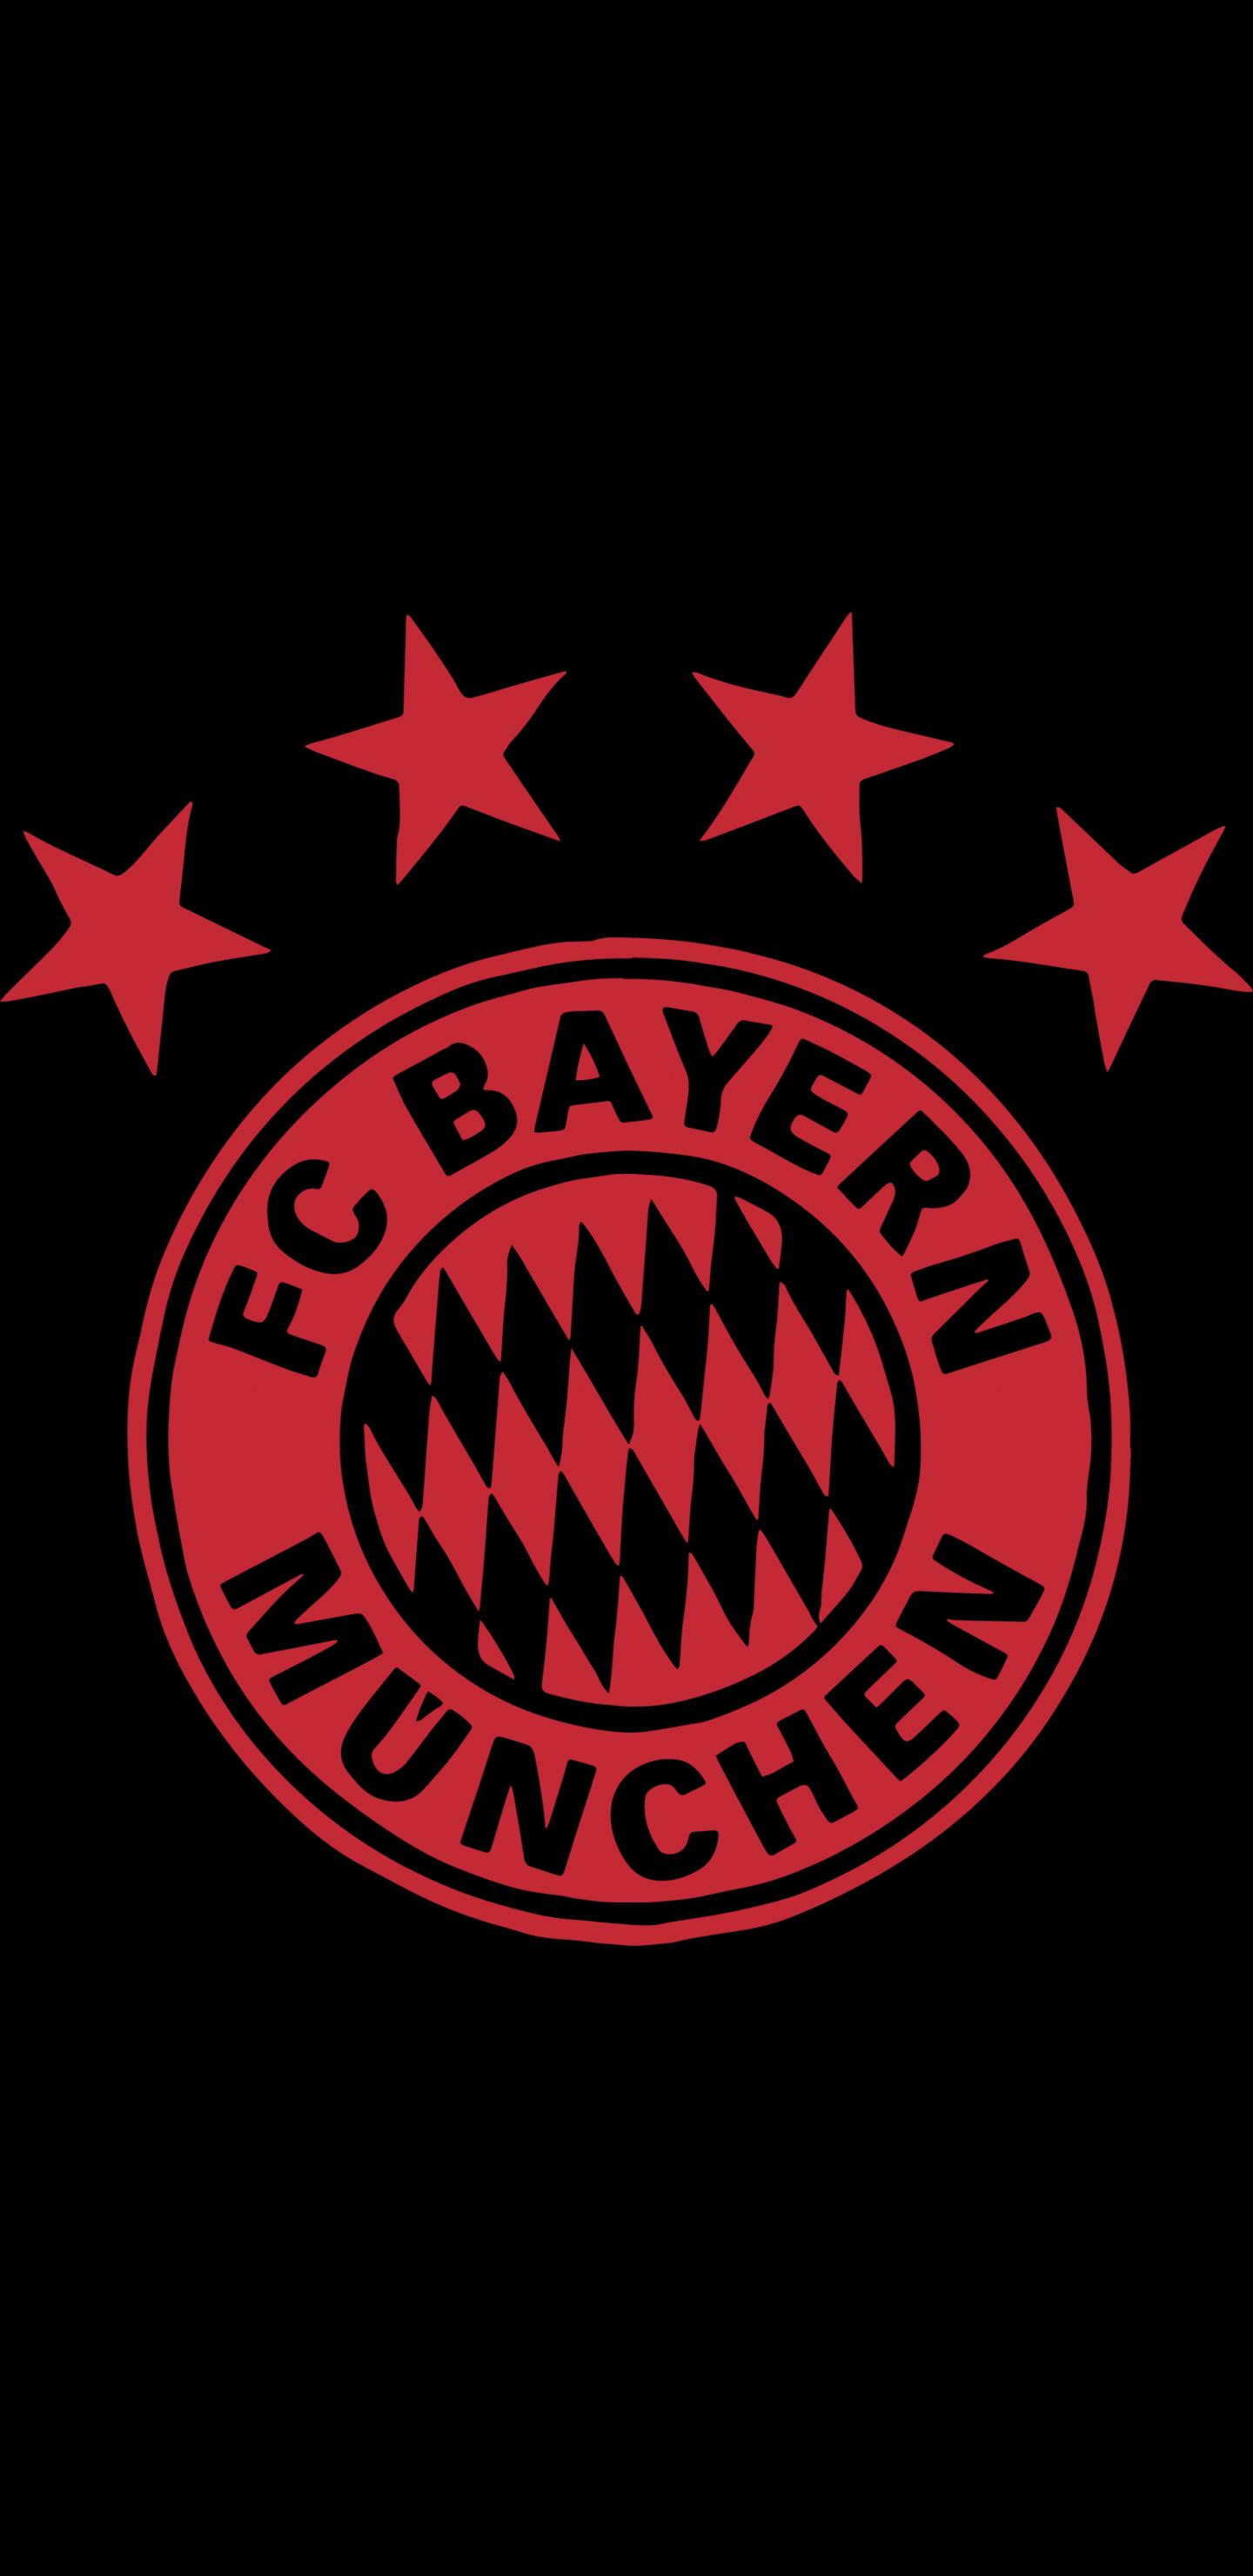 FC Bayern Munich Wallpapers - Top 35 Best FC Bayern Munich Backgrounds  Download